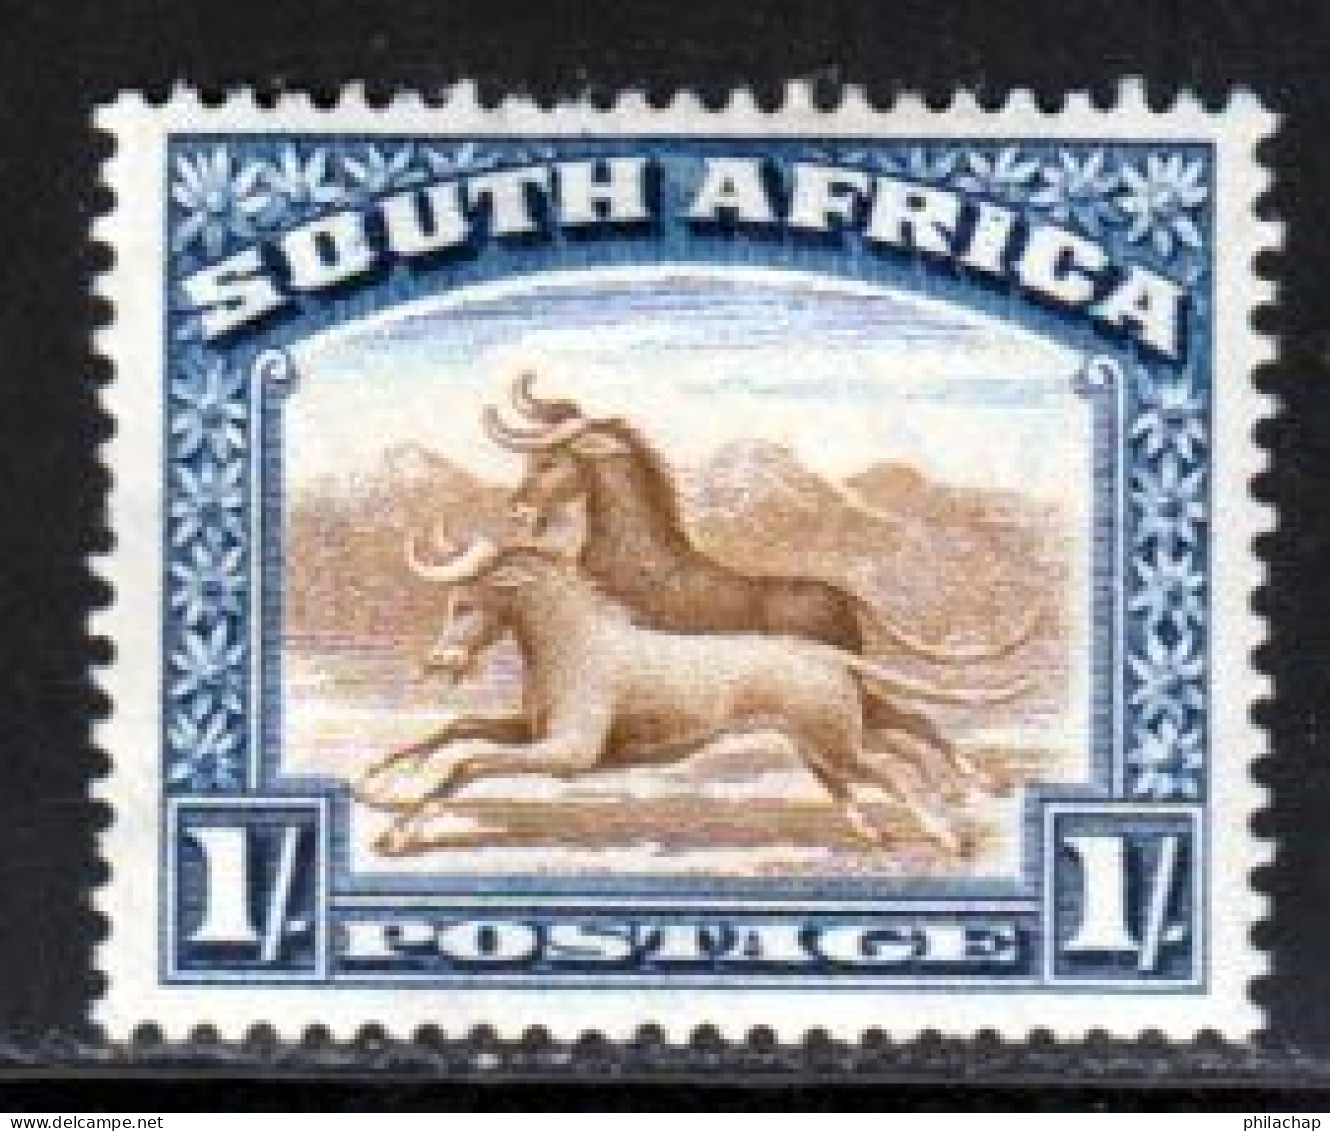 Afrique Du Sud 1927 Yvert 27 * B Charniere(s) - Nuovi